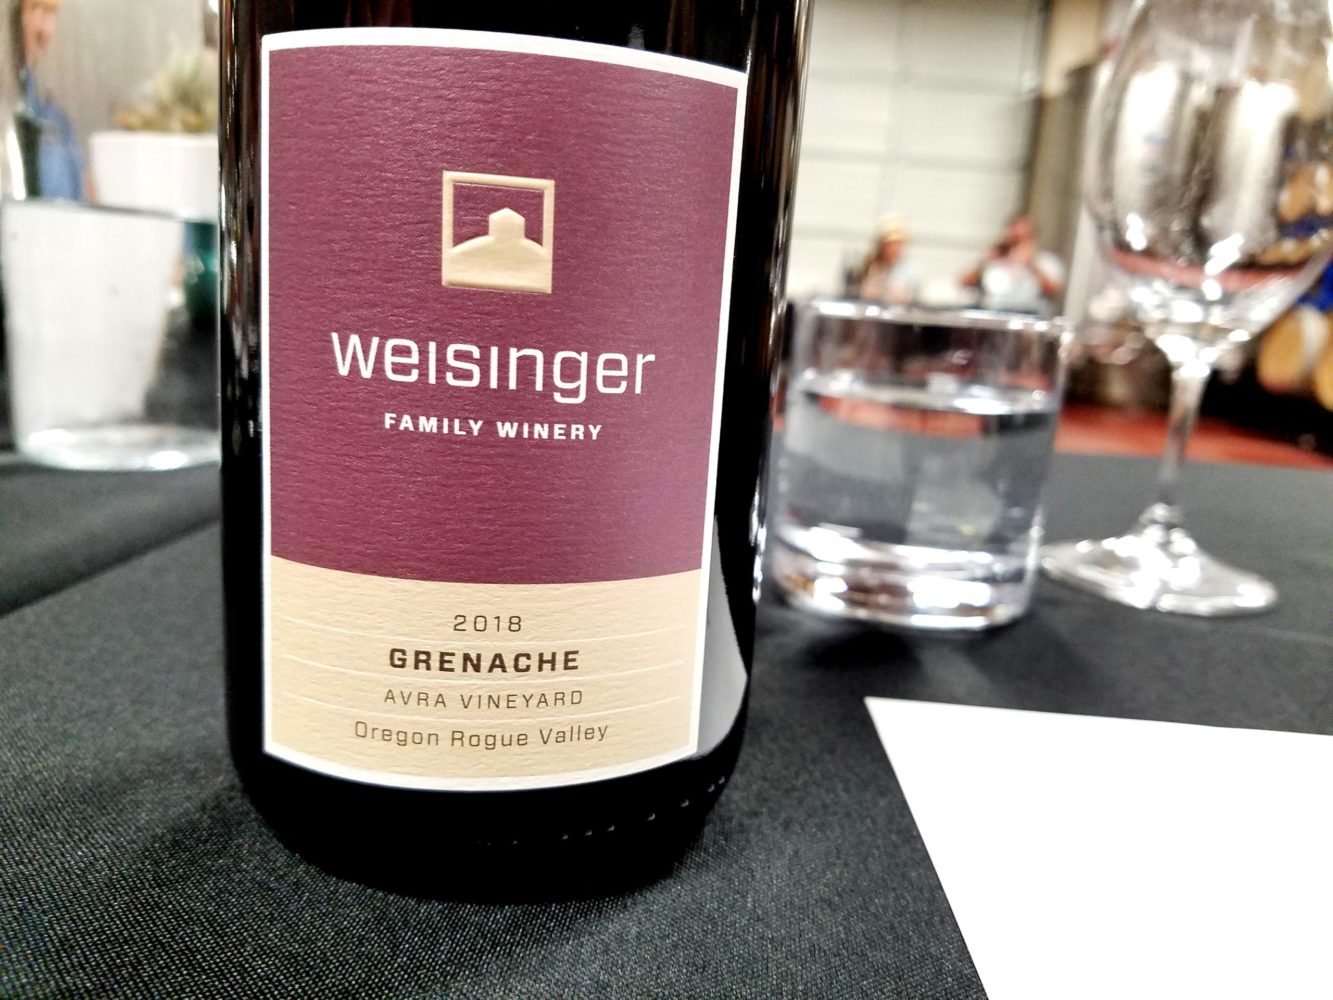 Weisinger Family Winery, Grenache 2018, Avra Vineyard, Rogue Valley, Oregon, Wine Casual